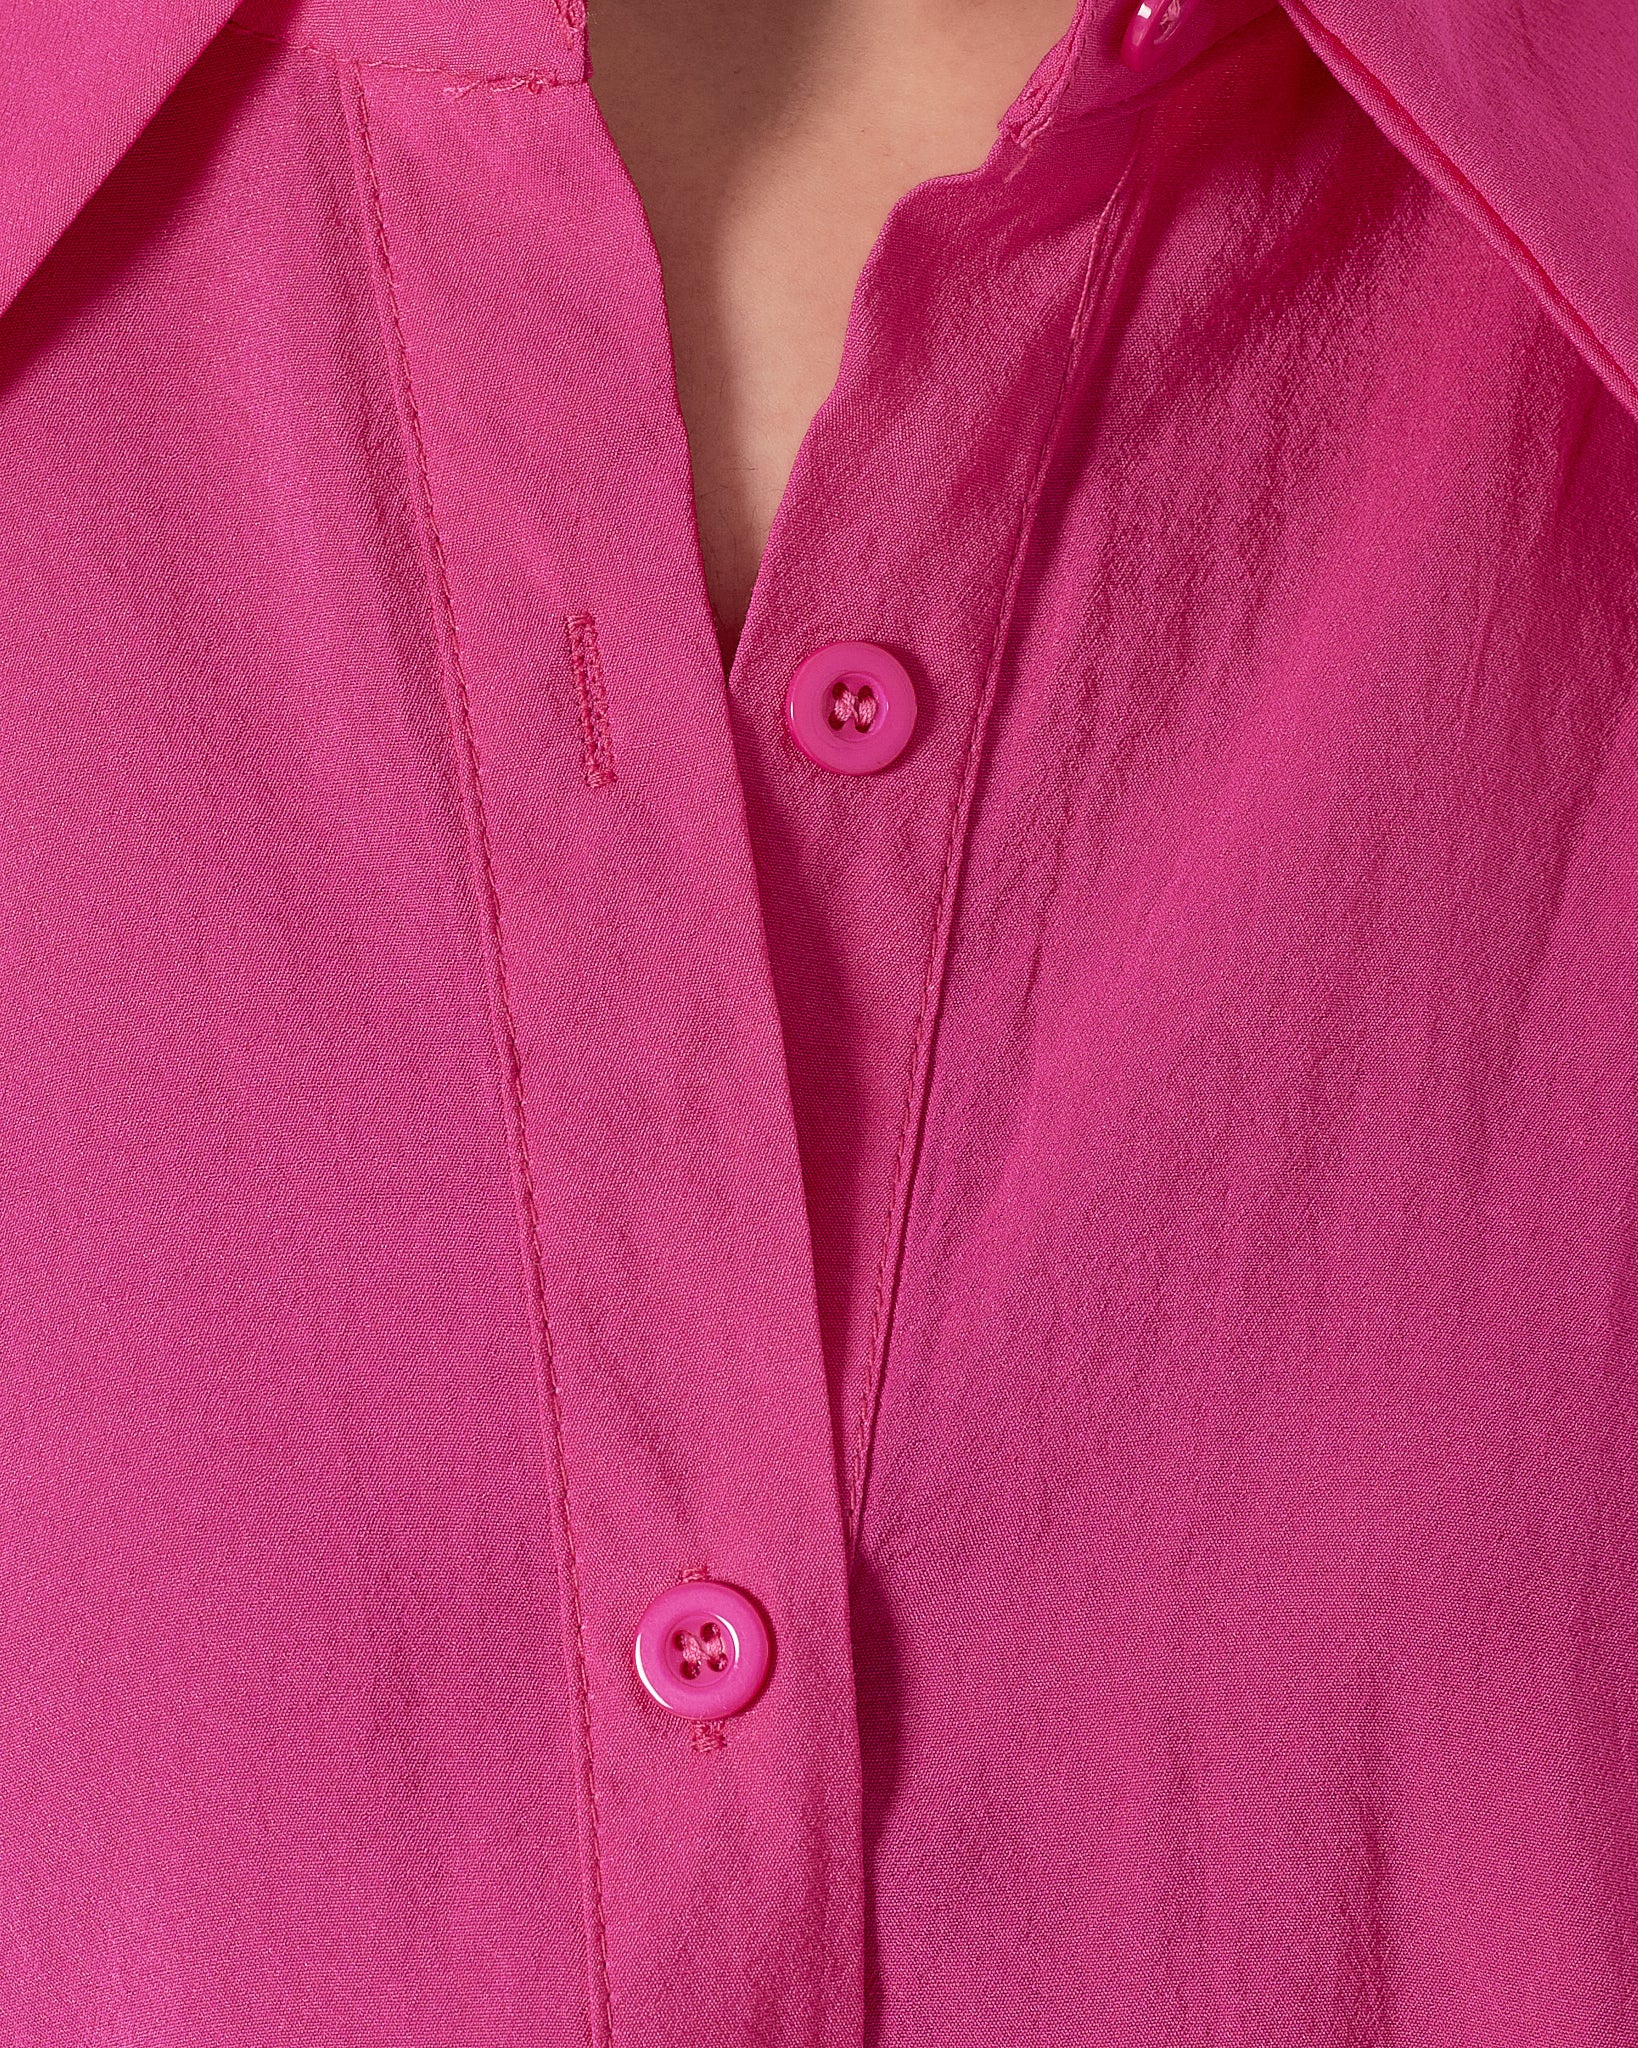 Lady Pink  Shirts Short Sleeve 14.90